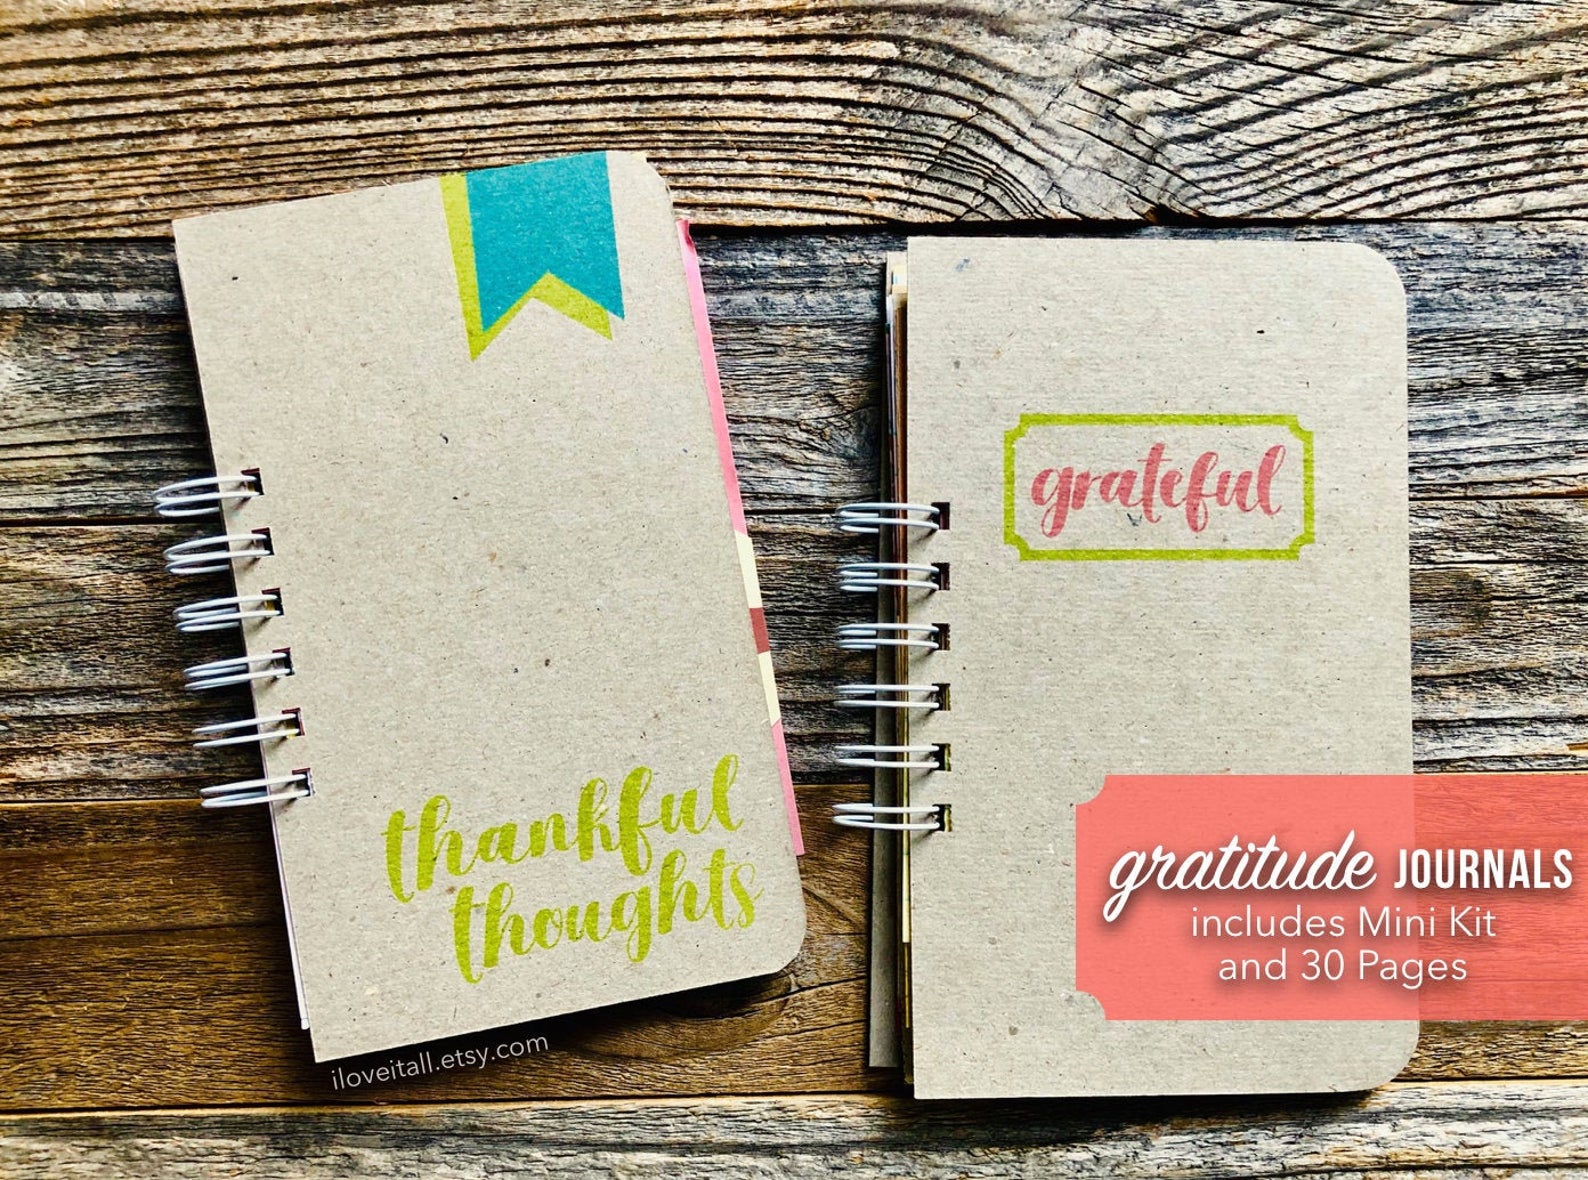 #gratitude journal #gratitude #journaling #journaling cards #positivity #journal #notebook #thankful #grateful